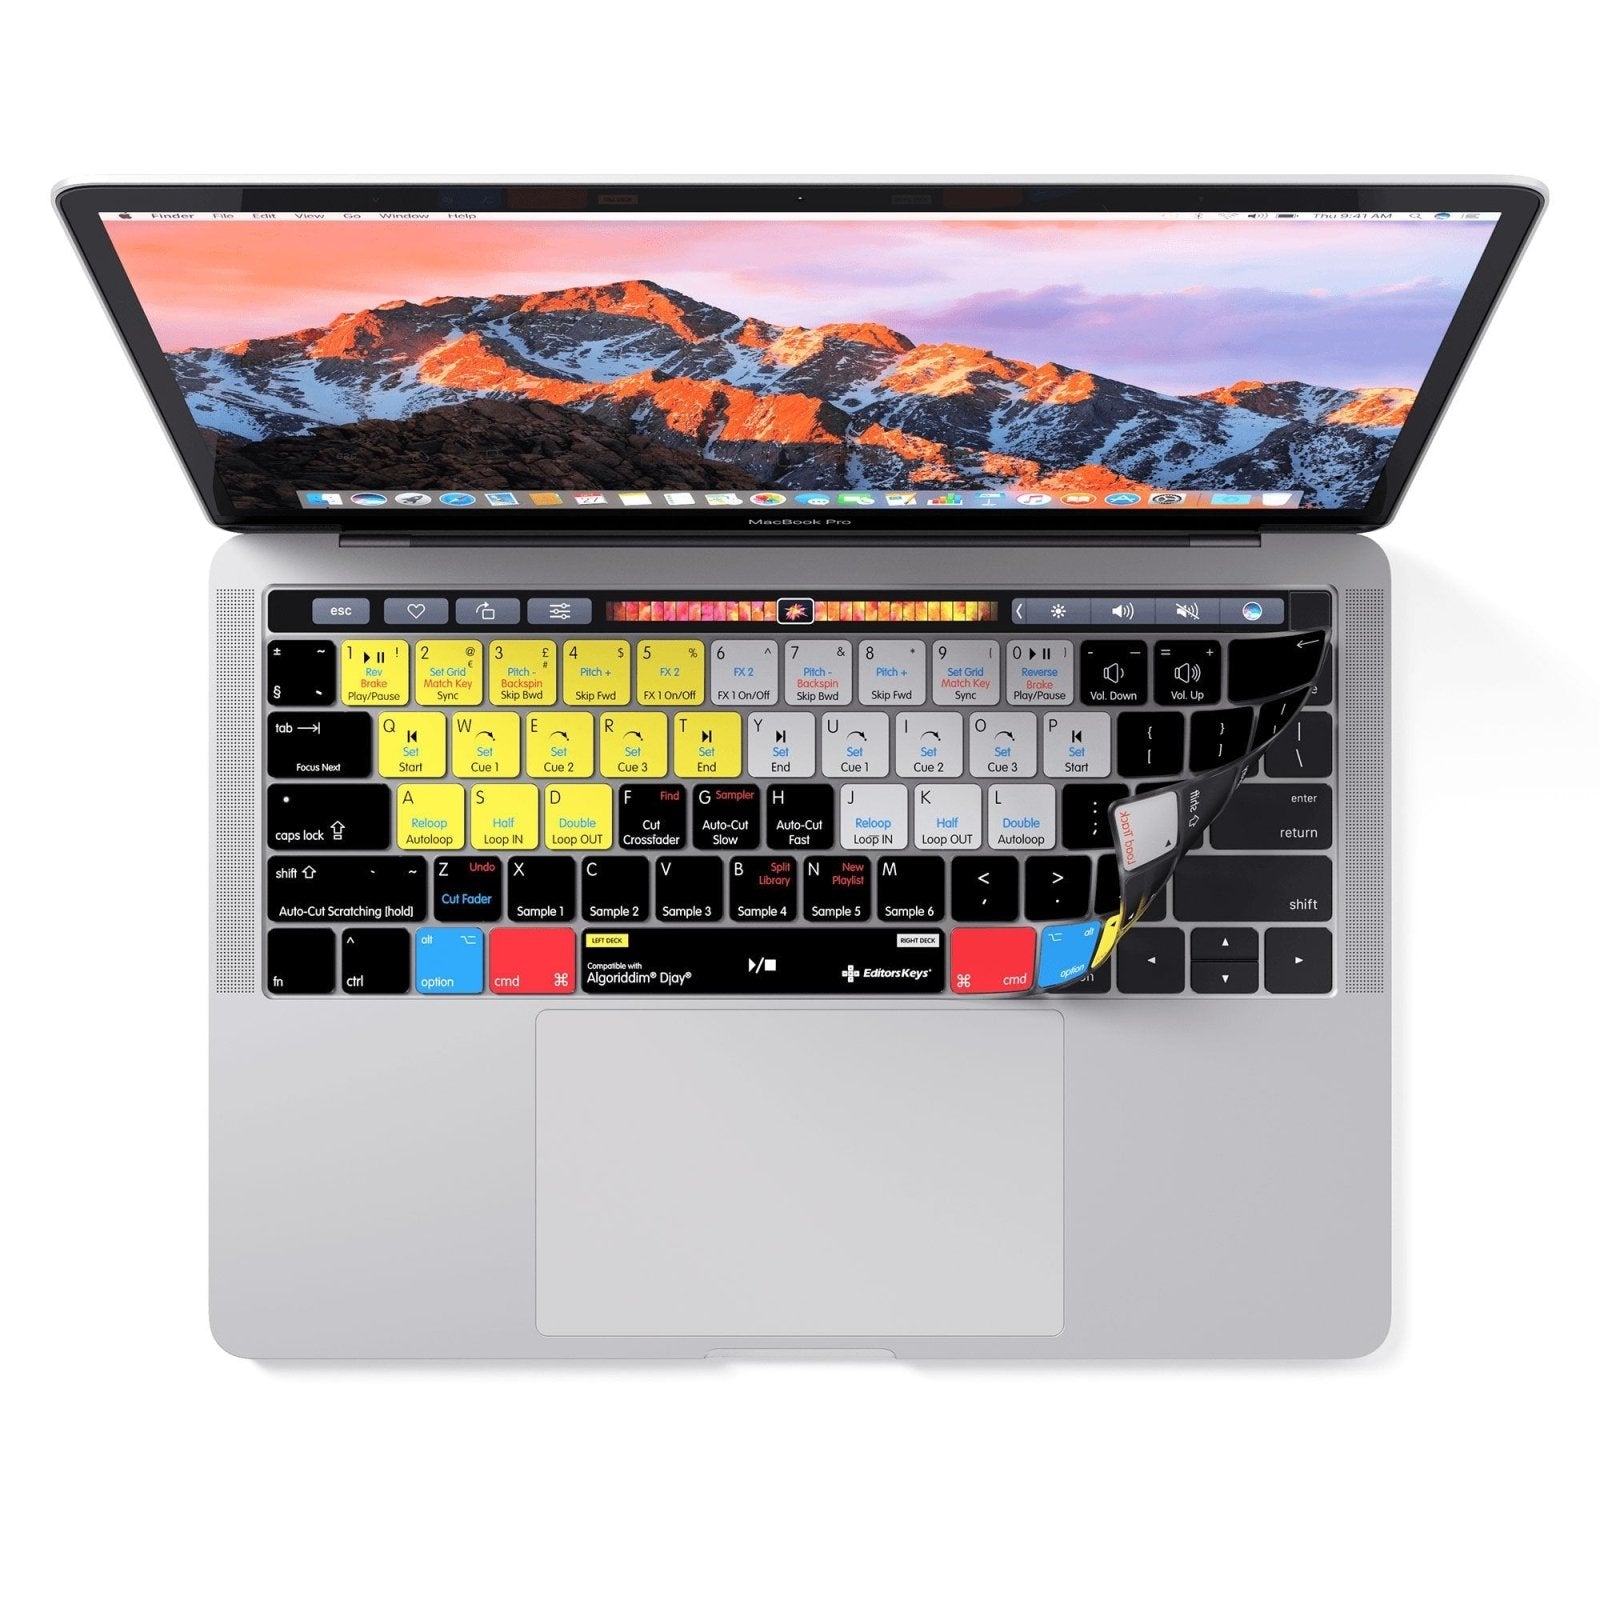 Djay Keyboard Covers for MacBook and iMac - Editors Keys